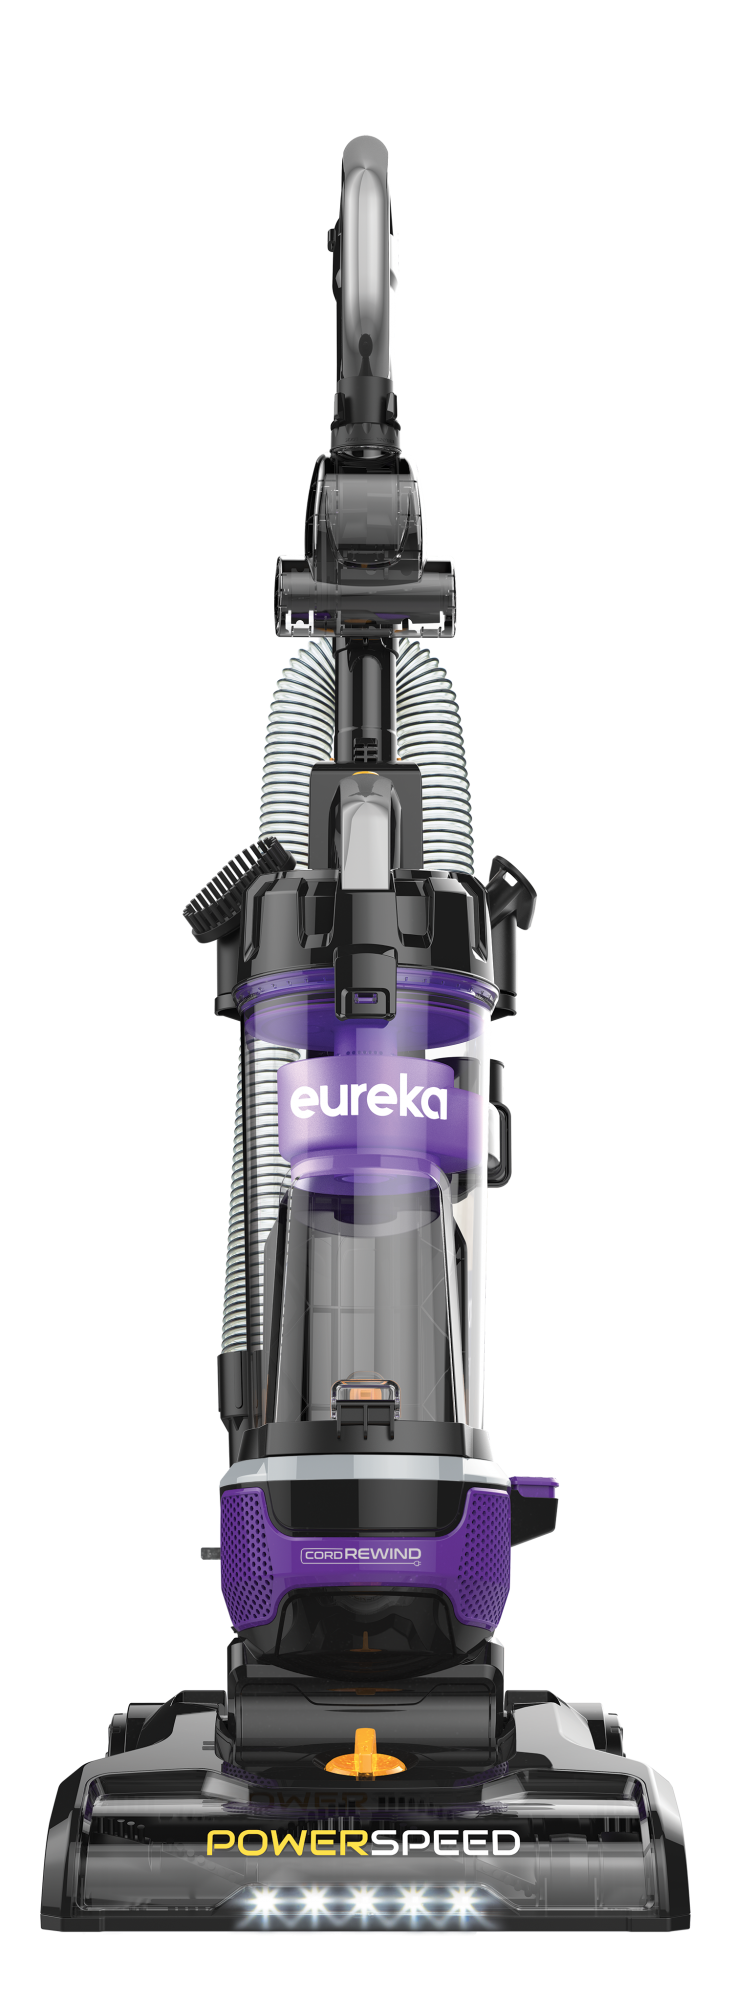  Eureka PowerSpeed Lightweight is awesome! 